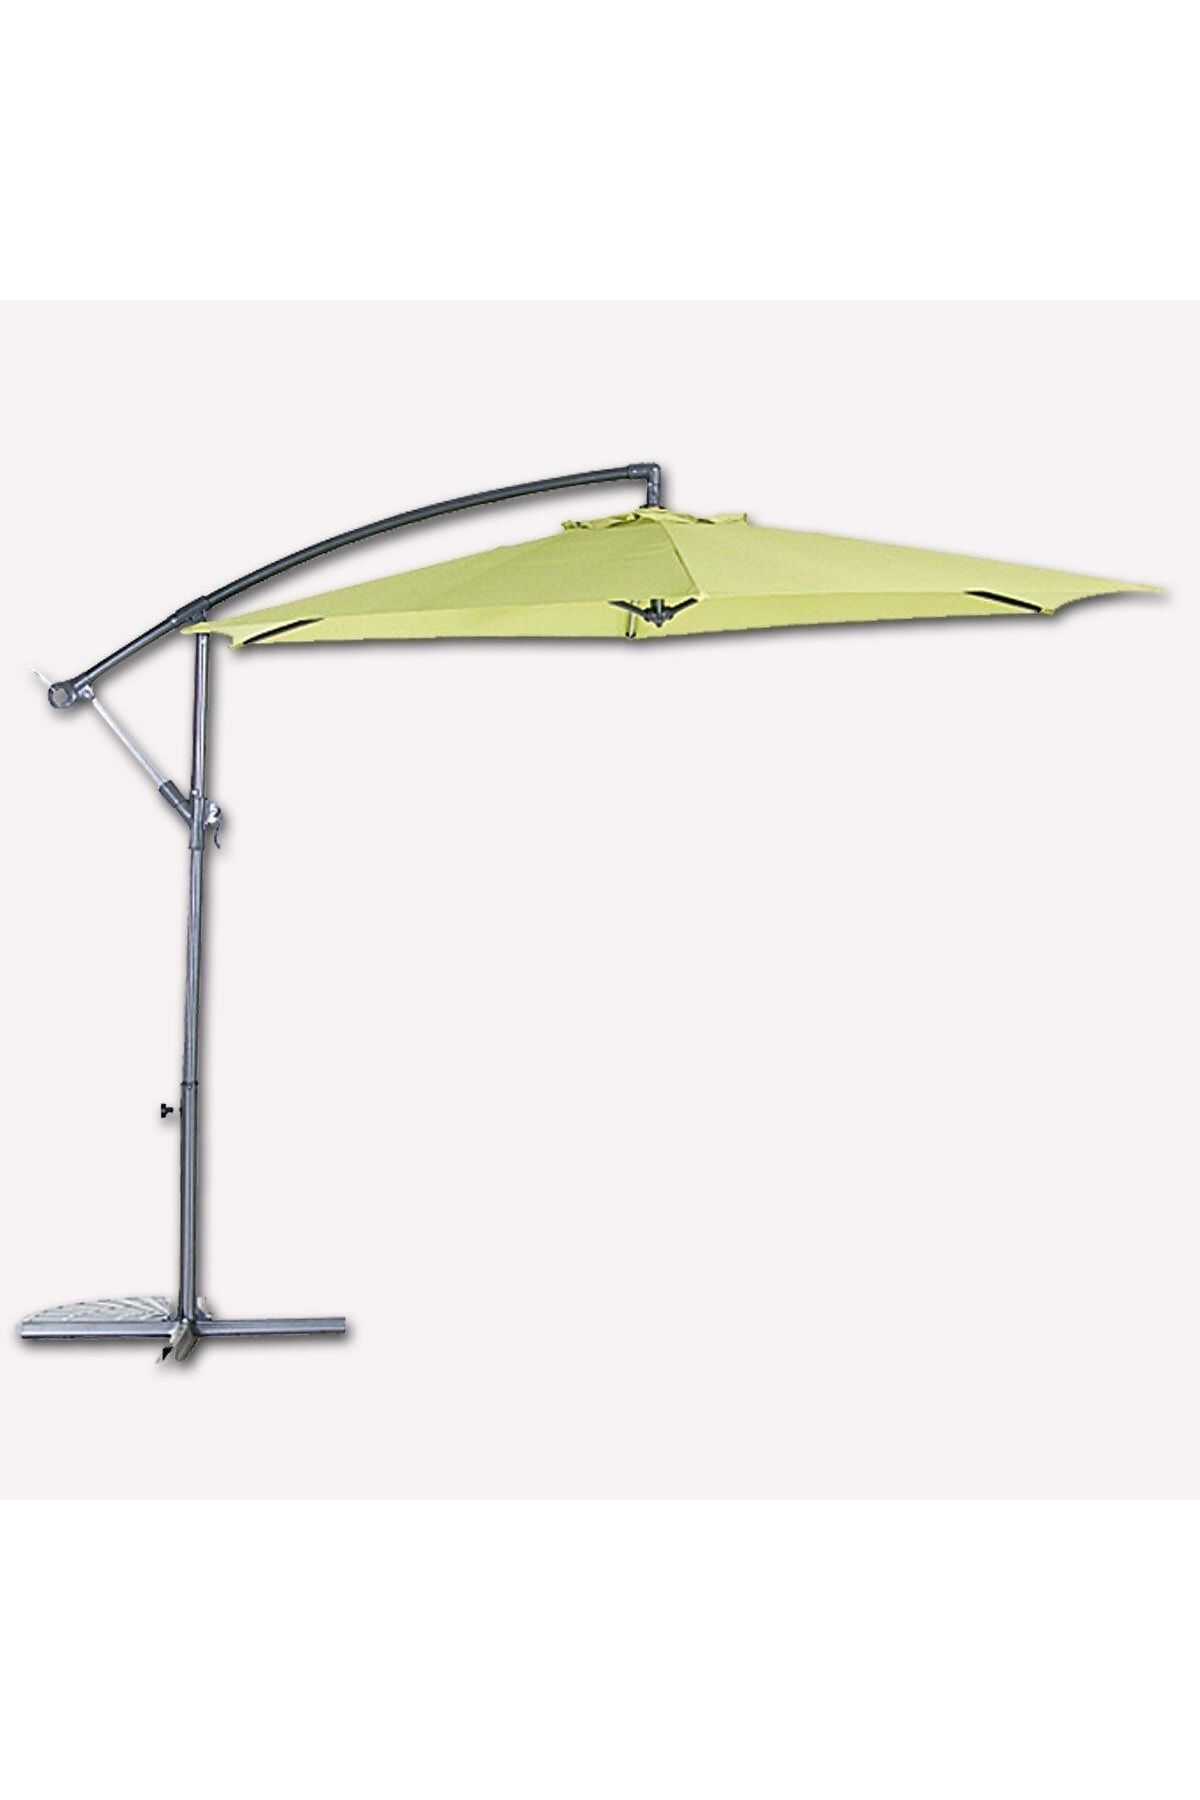 Bidesenal Makaralı Sistem Bahçe Şemsiyesi, Ampül Şemsiye, 300cm Polyester Bahçe Şemsiyesi Aş07